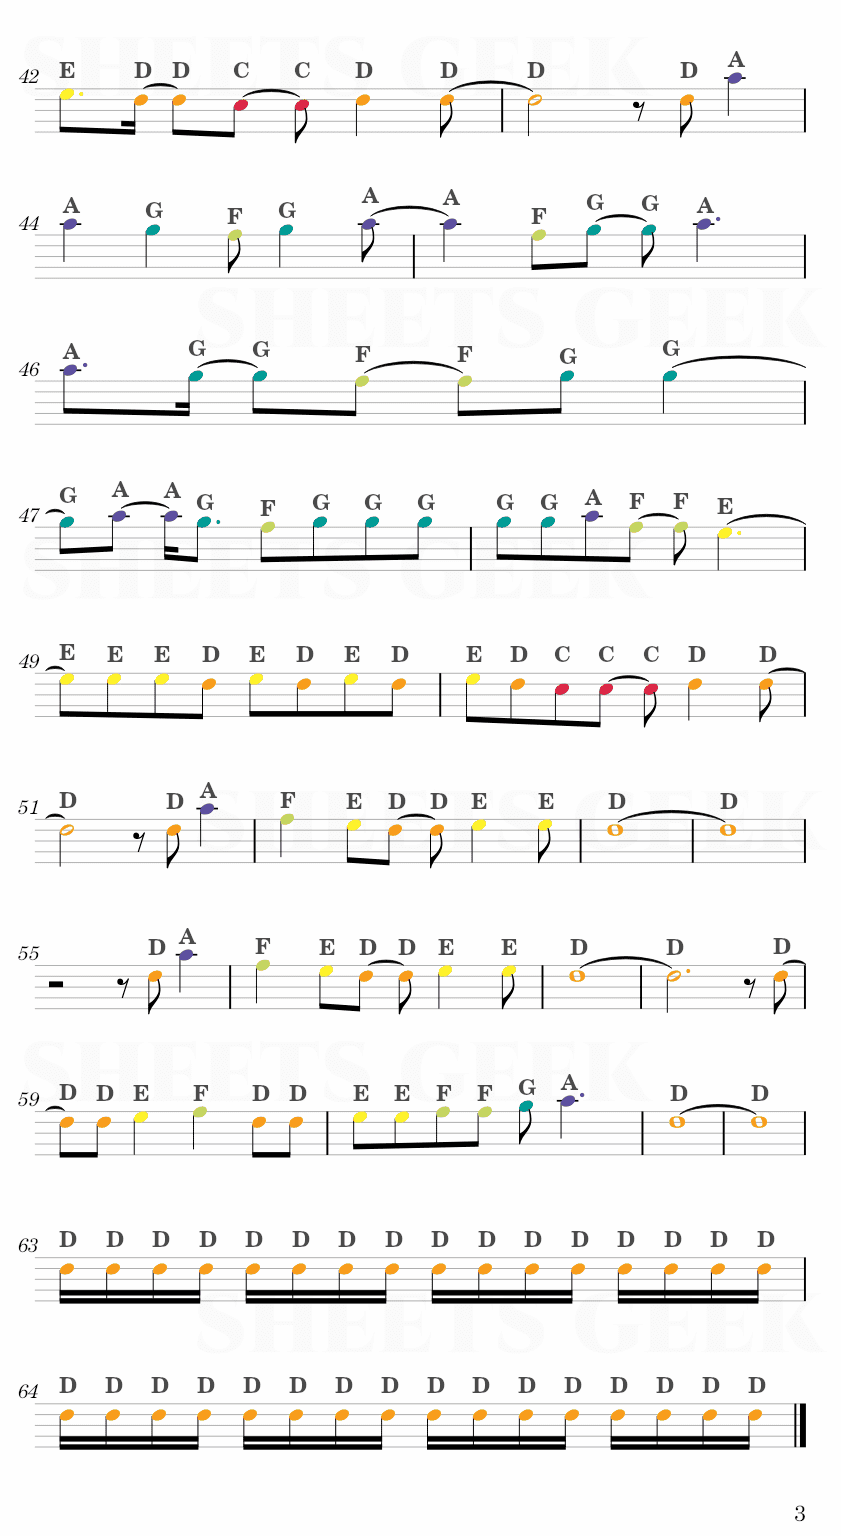 VIVID VICE - Jujutsu Kaisen Opening 2 Easy Sheet Music Free for piano, keyboard, flute, violin, sax, cello page 3